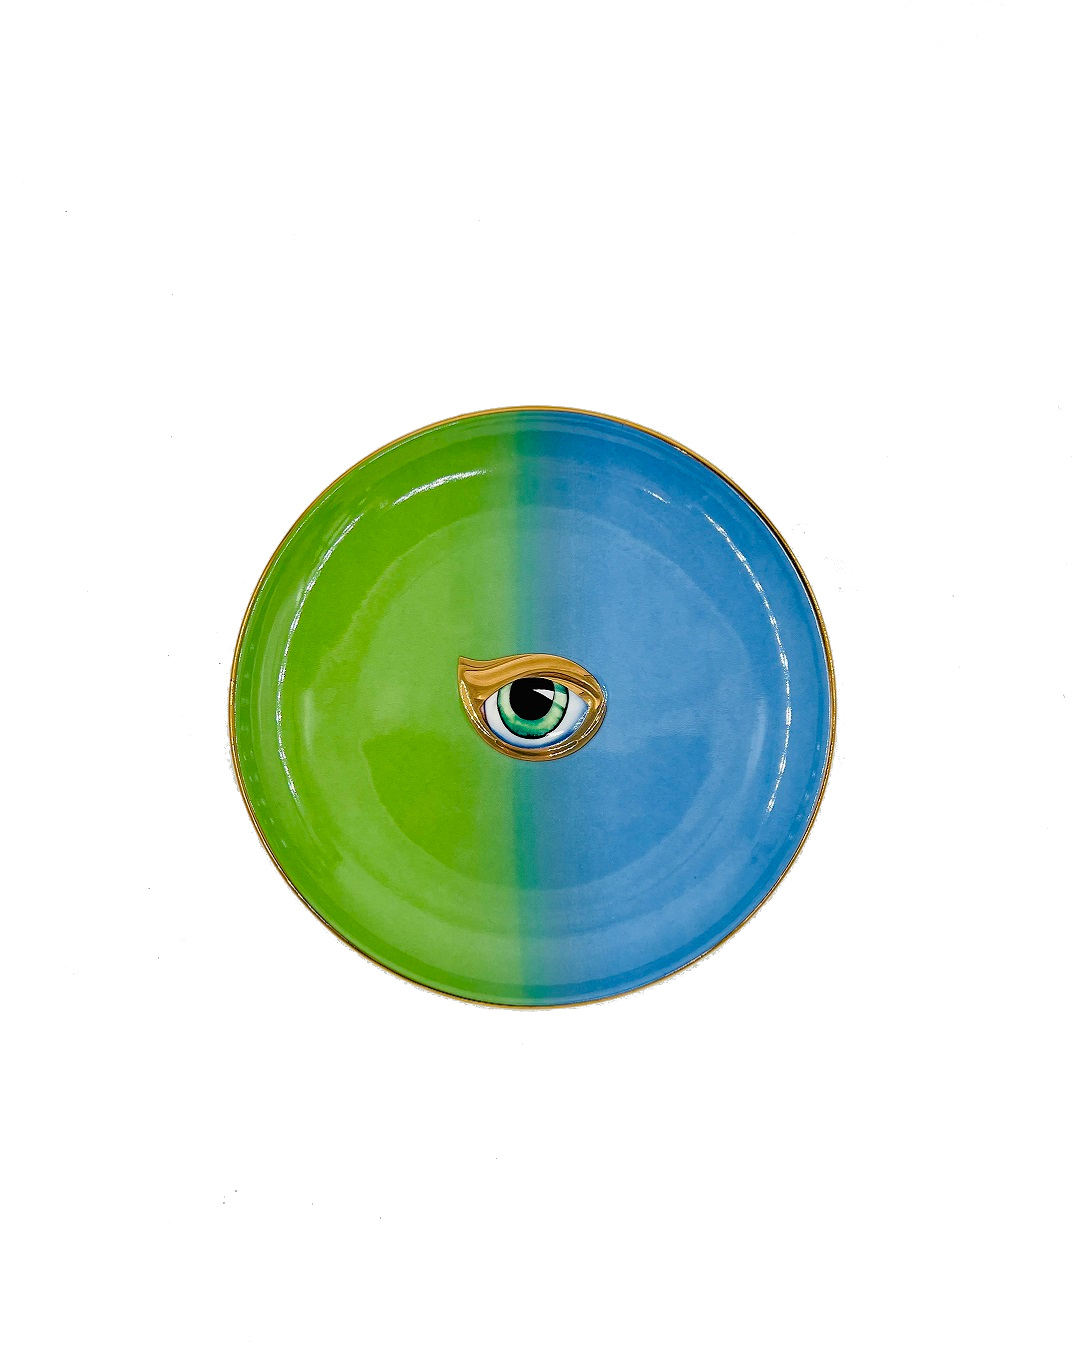 Green and blue eye plate